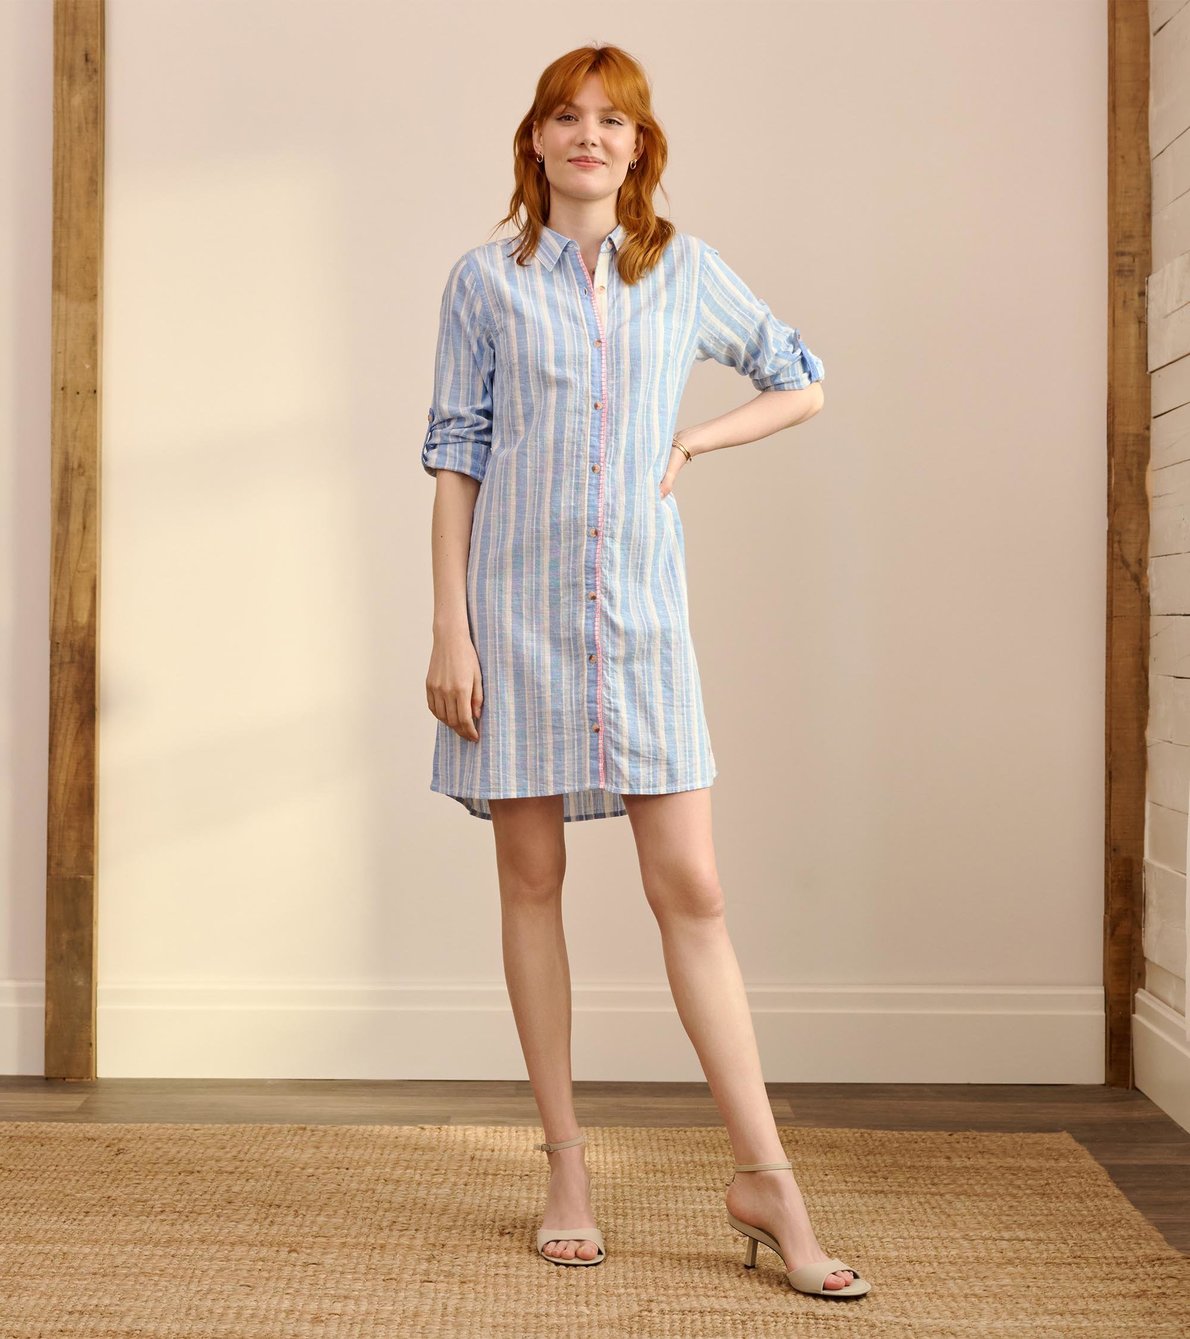 View larger image of Cara Shirt Dress - Light Blue Stripes